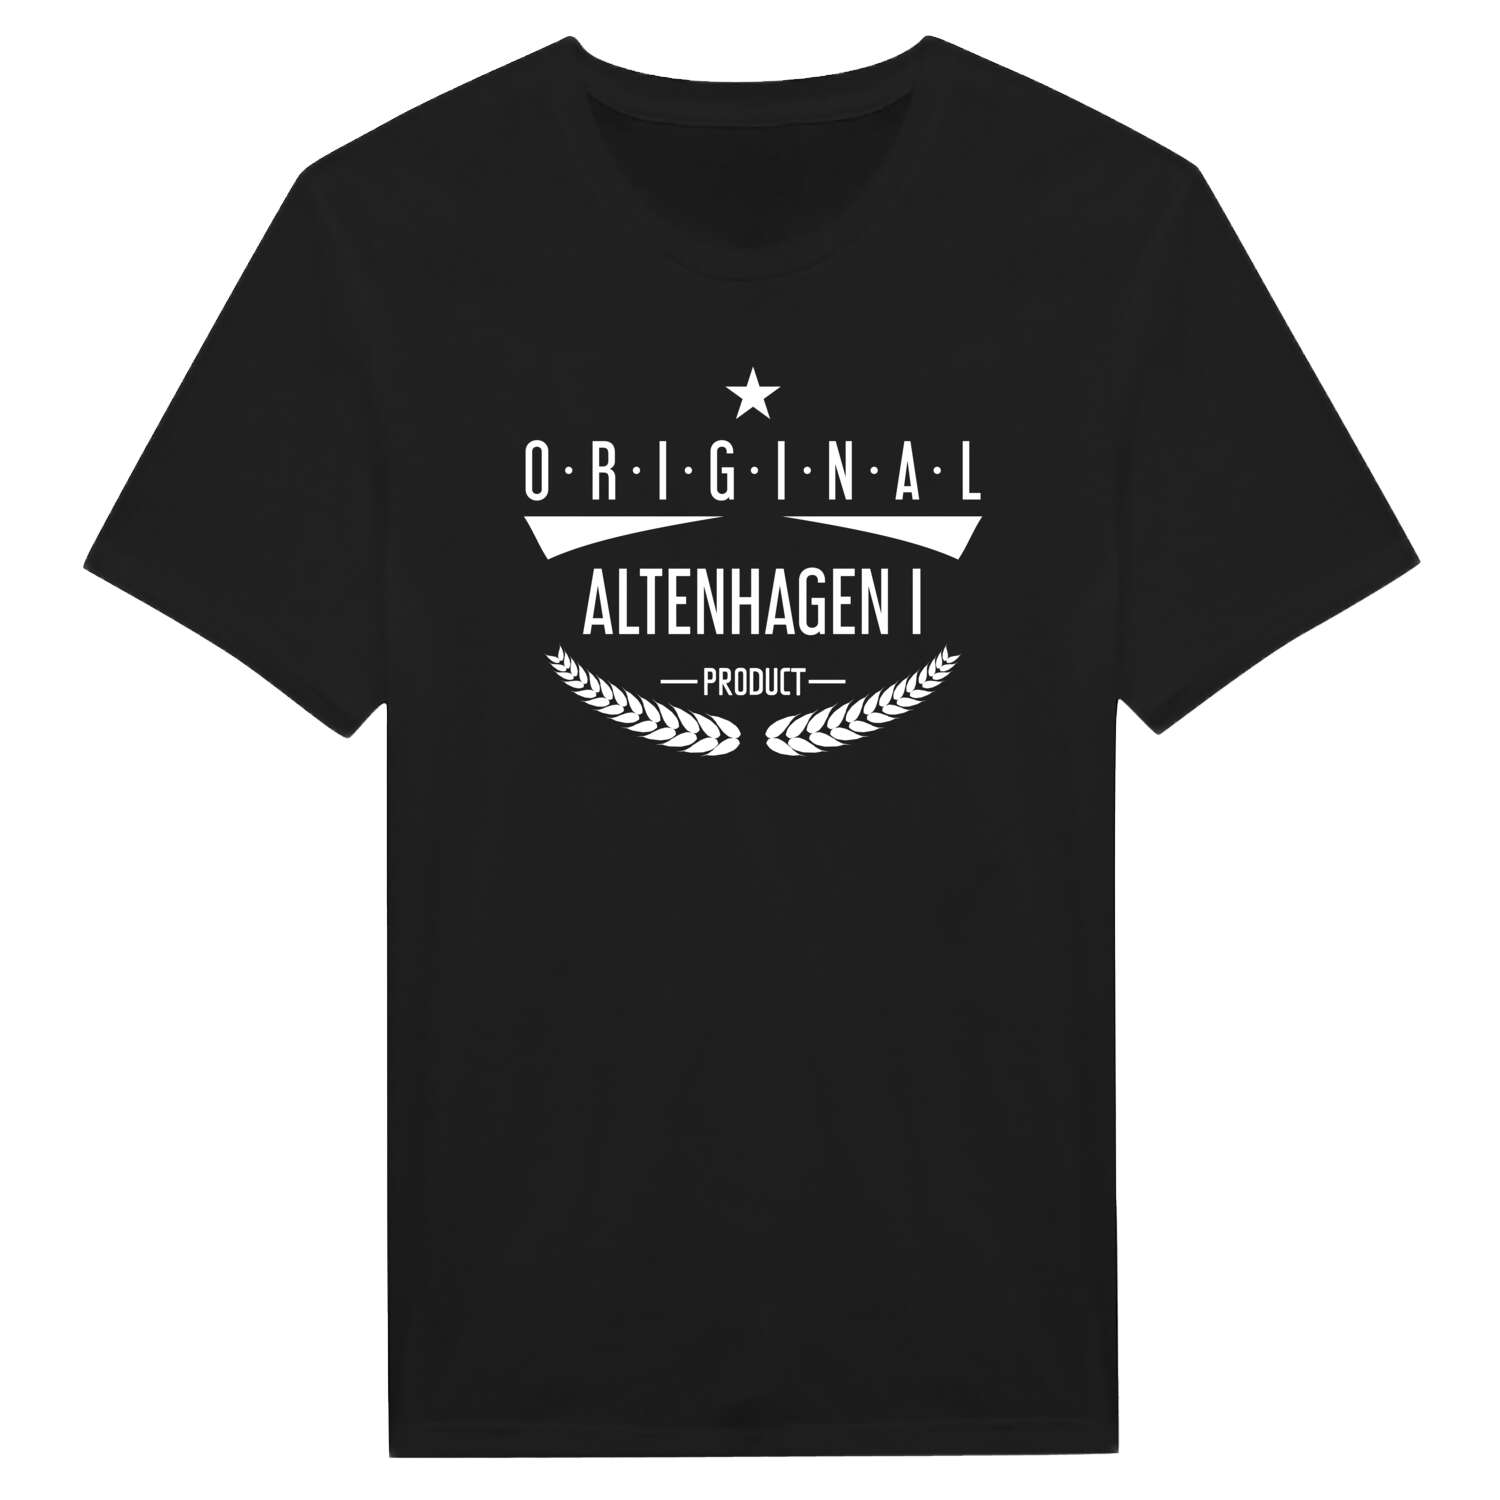 Altenhagen I T-Shirt »Original Product«